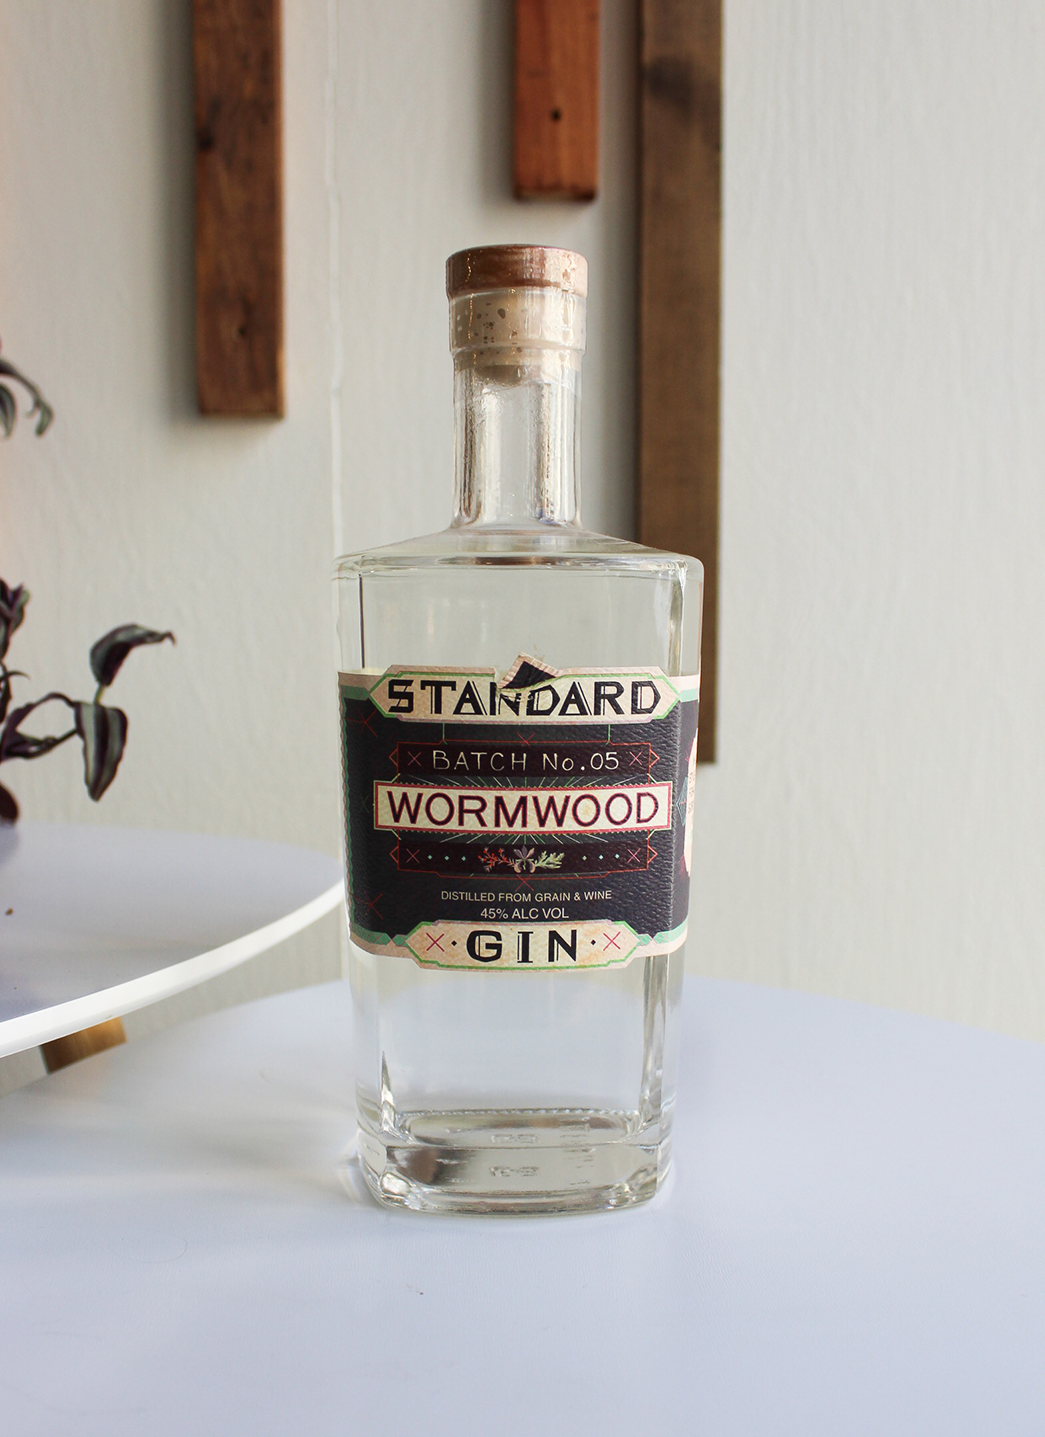 Standard Wormwood Gin